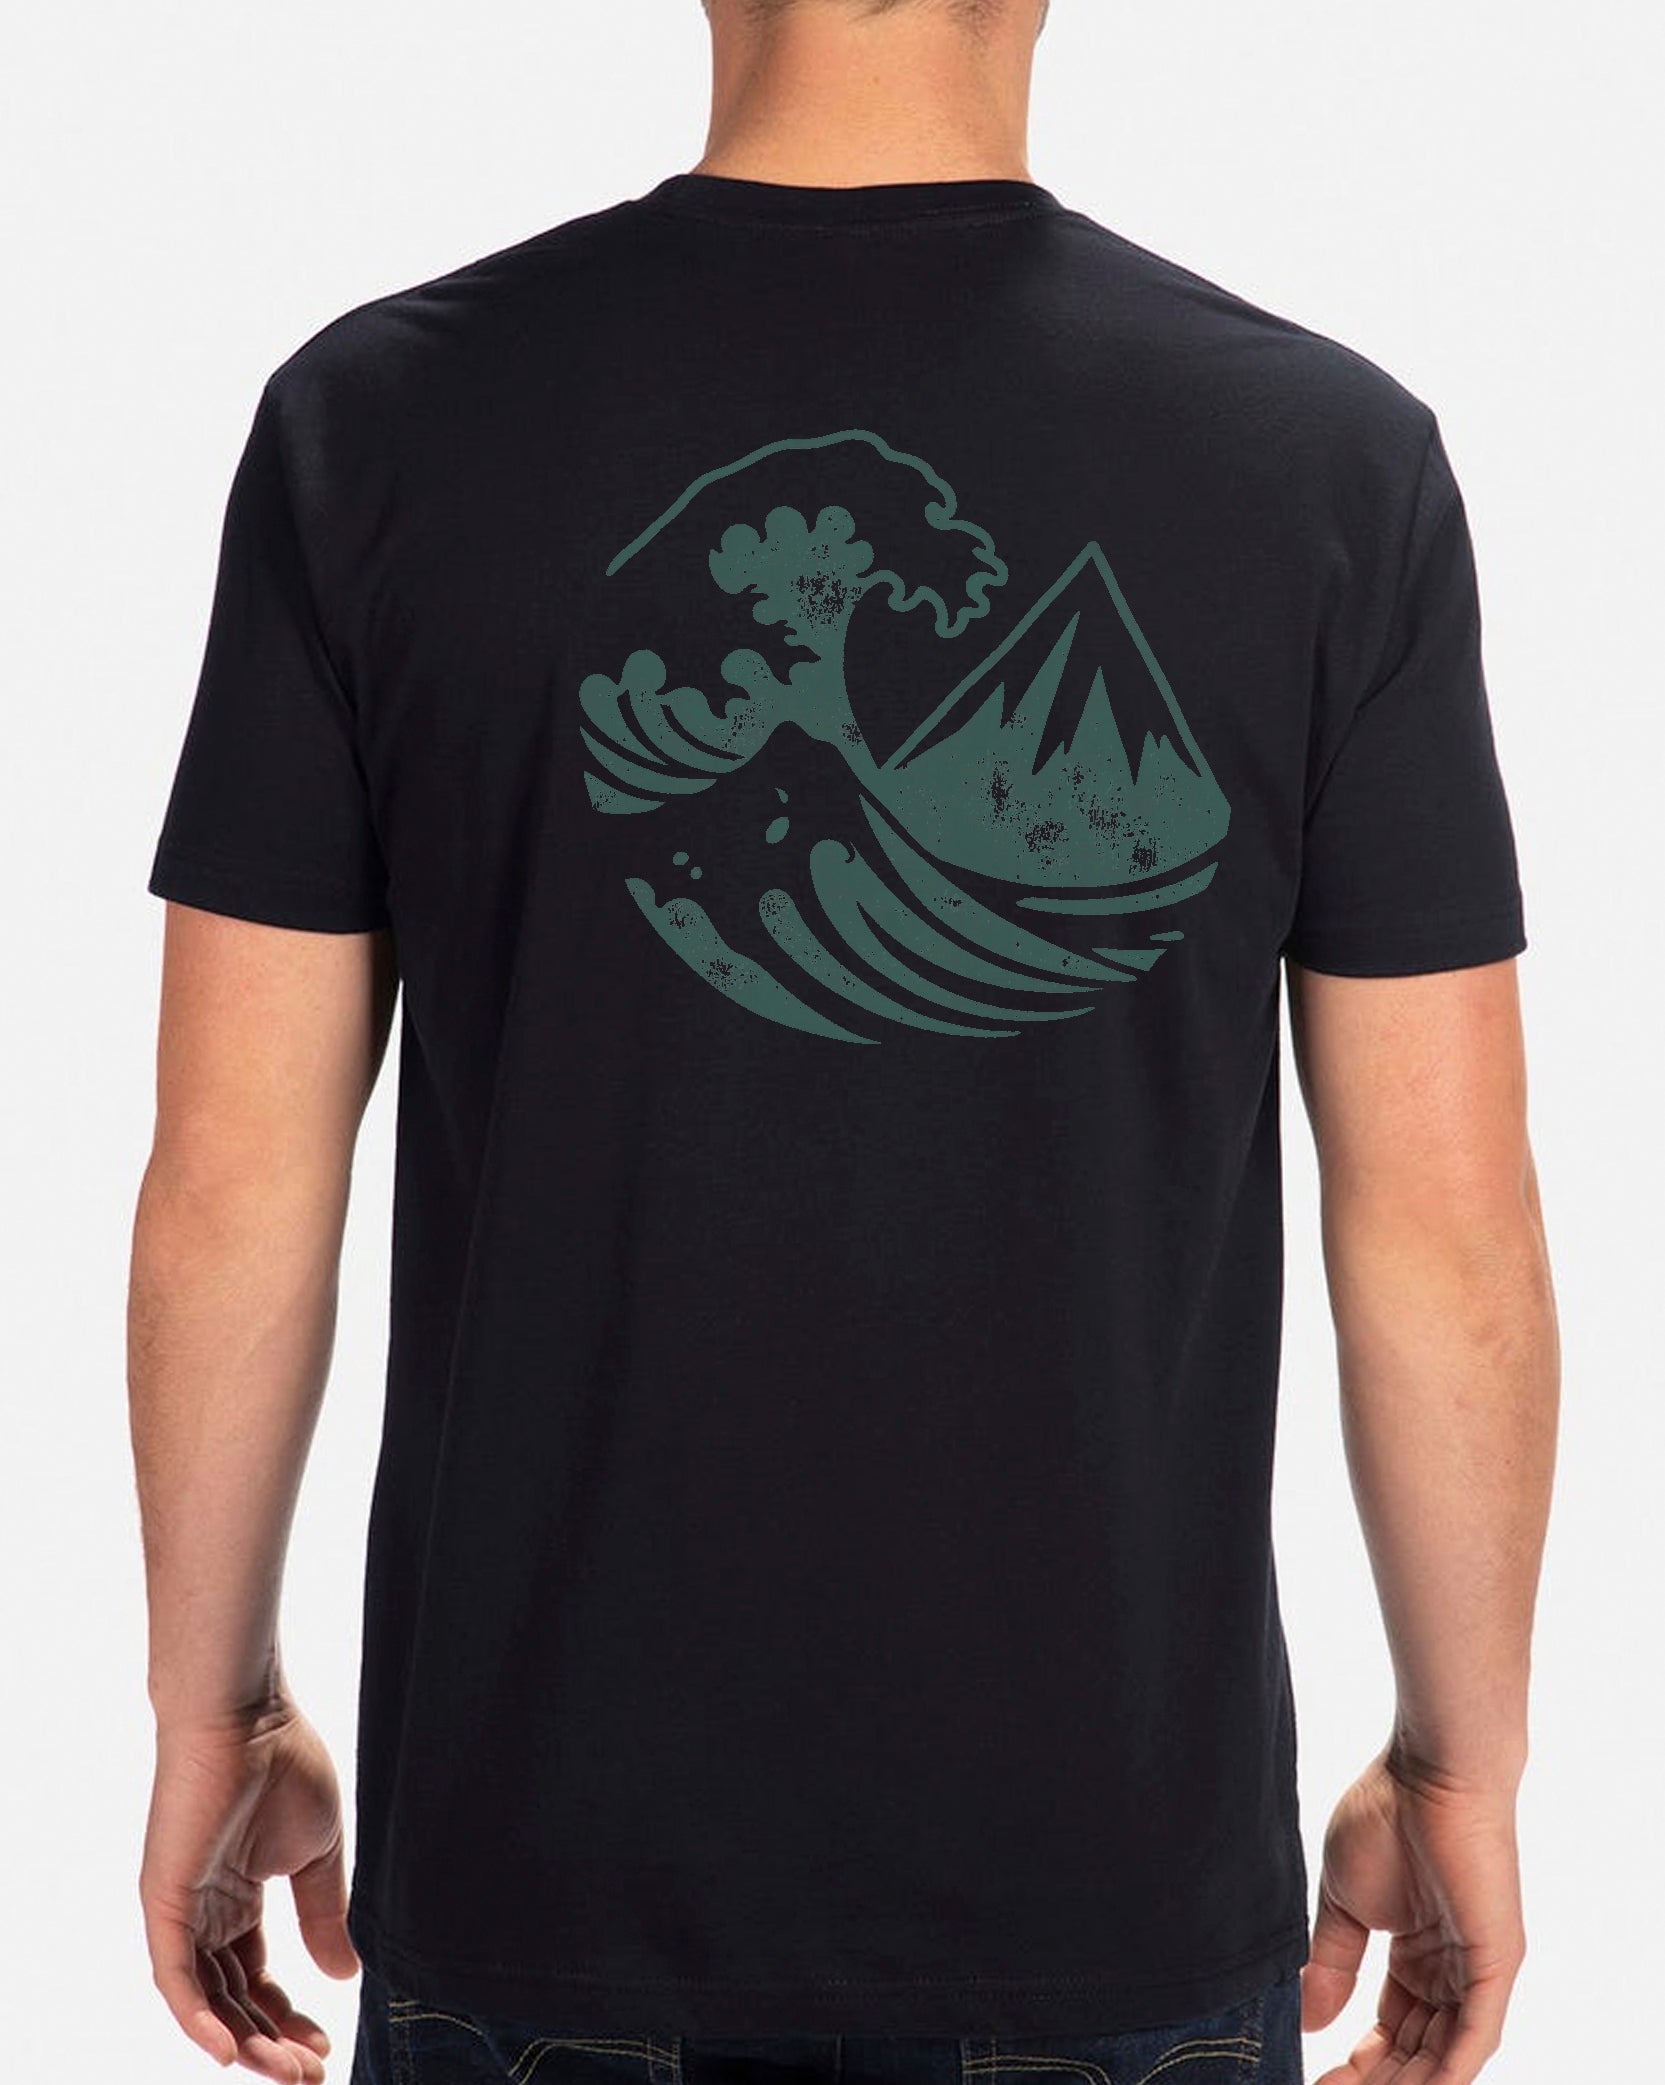 Mens Peak Surfing T-Shirt Black 1